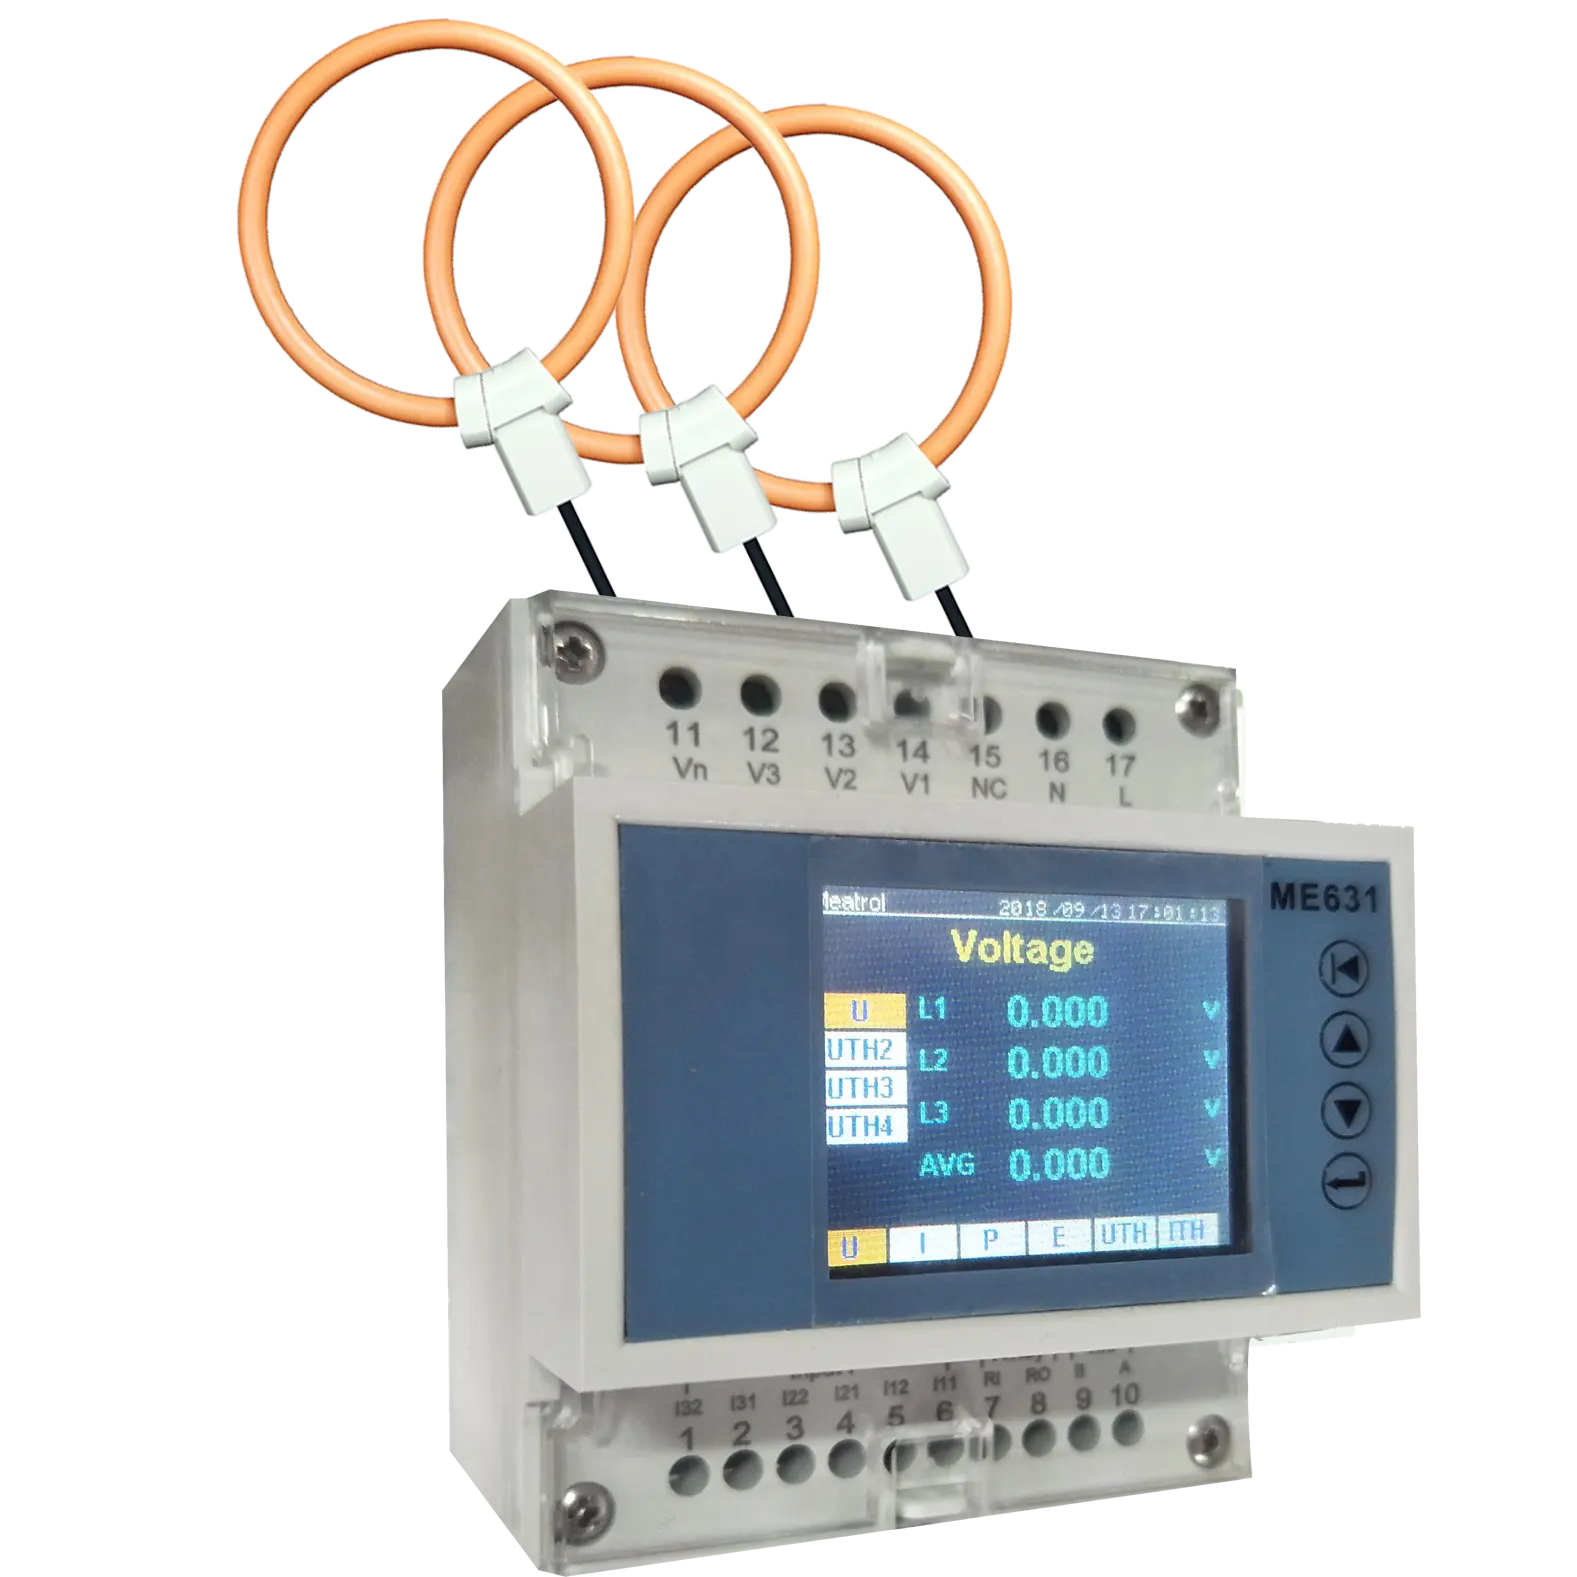 ME631 MODBUS RJ485 DIN-RAIL 3 PHASE test meter smart power energy meters rogowski multimetro digital